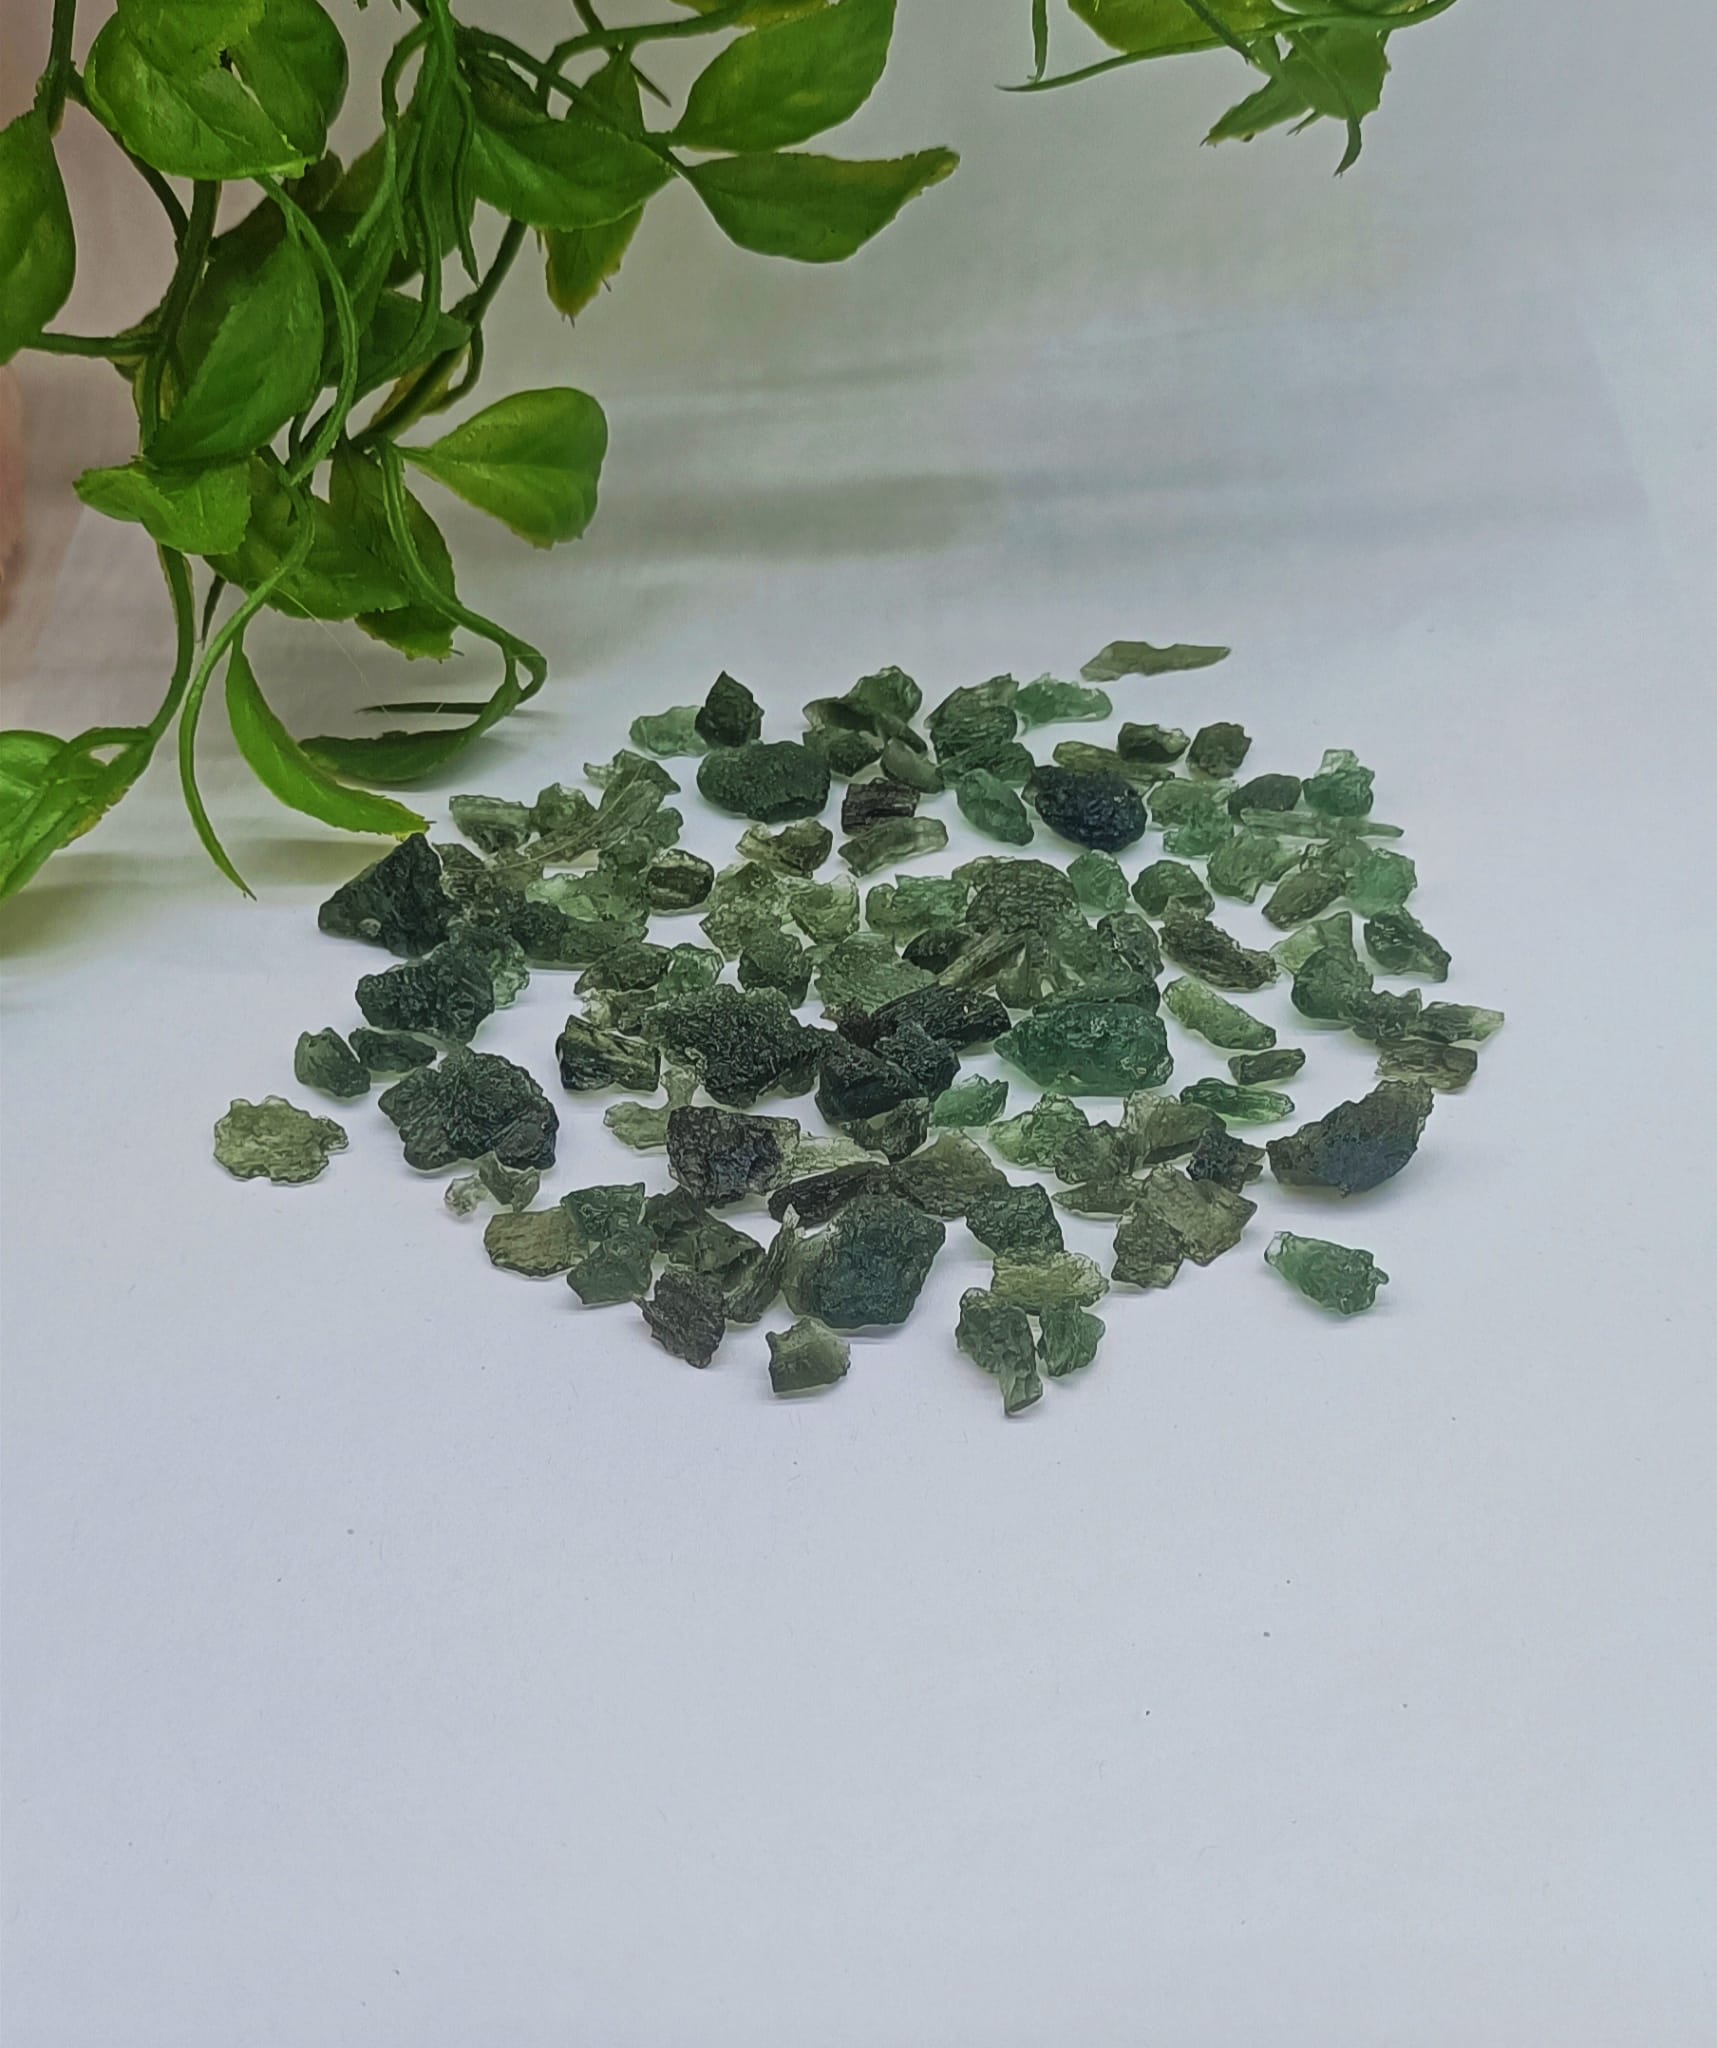 Authentic Raw Moldavite Small Sizes Crystal Wellness